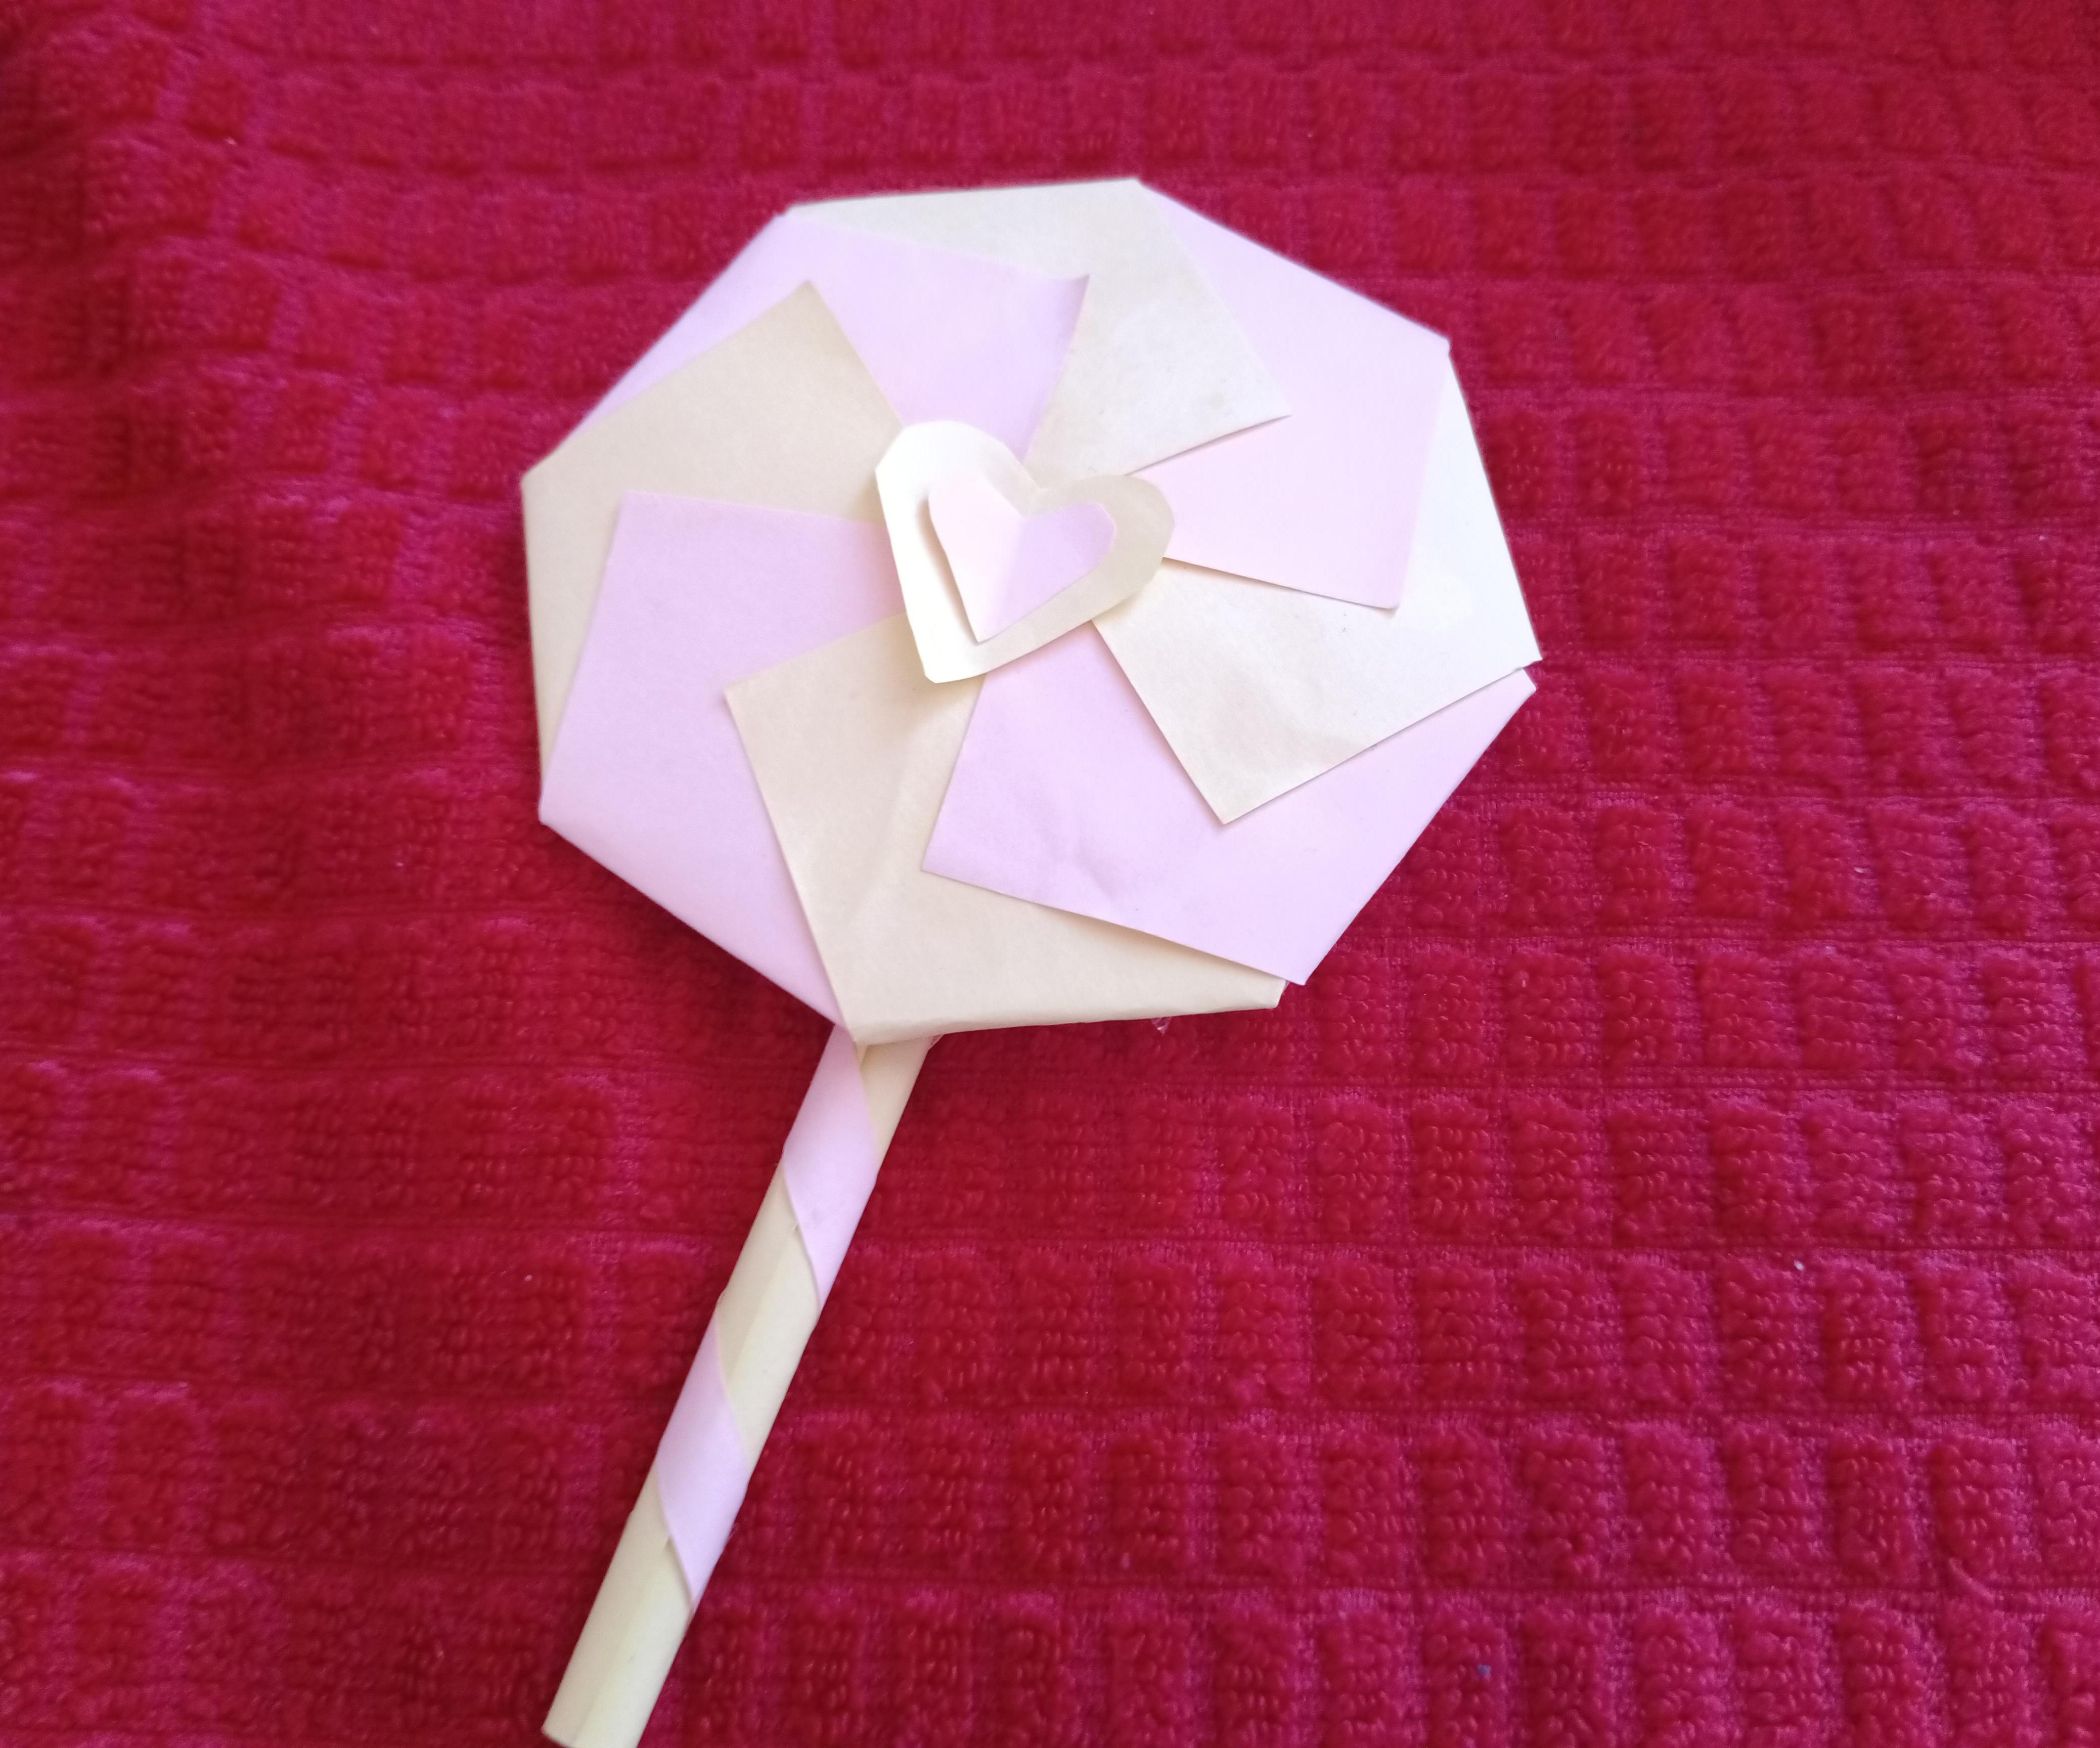 Origami Lollipop ᐠ( ᐛ )ᐟ